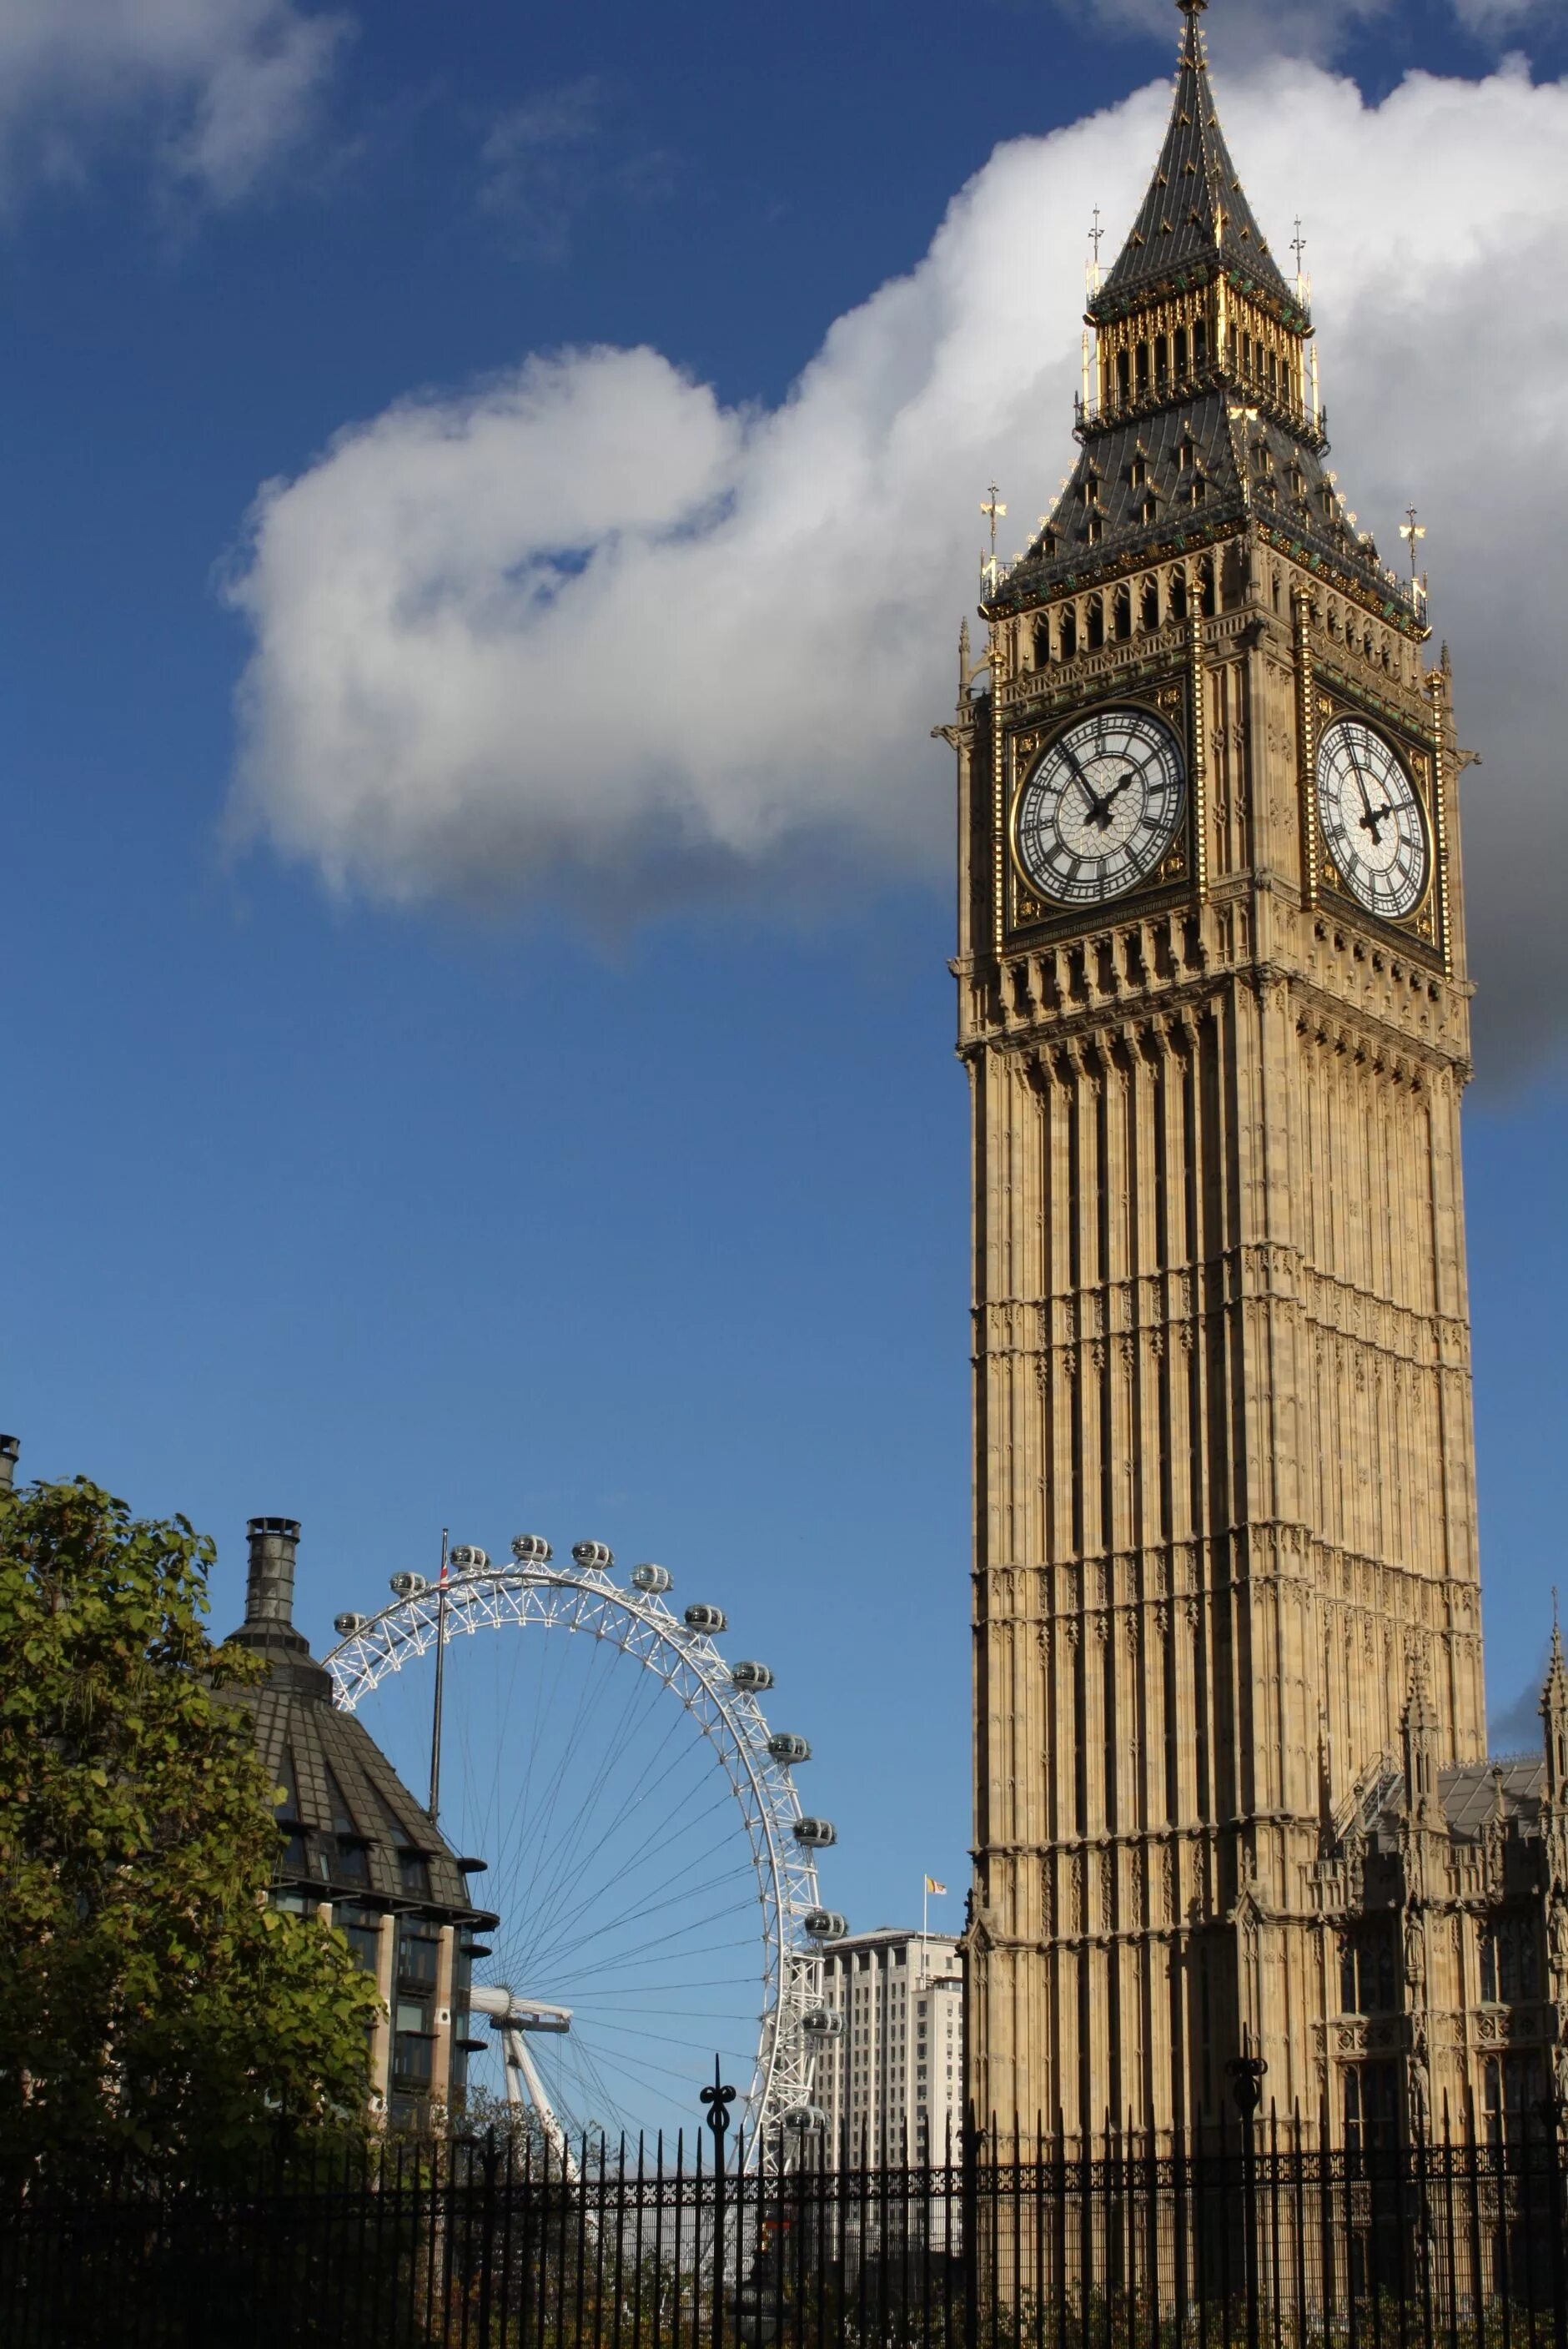 Лондонские часы Биг Бен. Башня Биг Бен в Лондоне. Великобритания часы Биг Бен. Биг-Бен (башня Елизаветы). Big ben listening